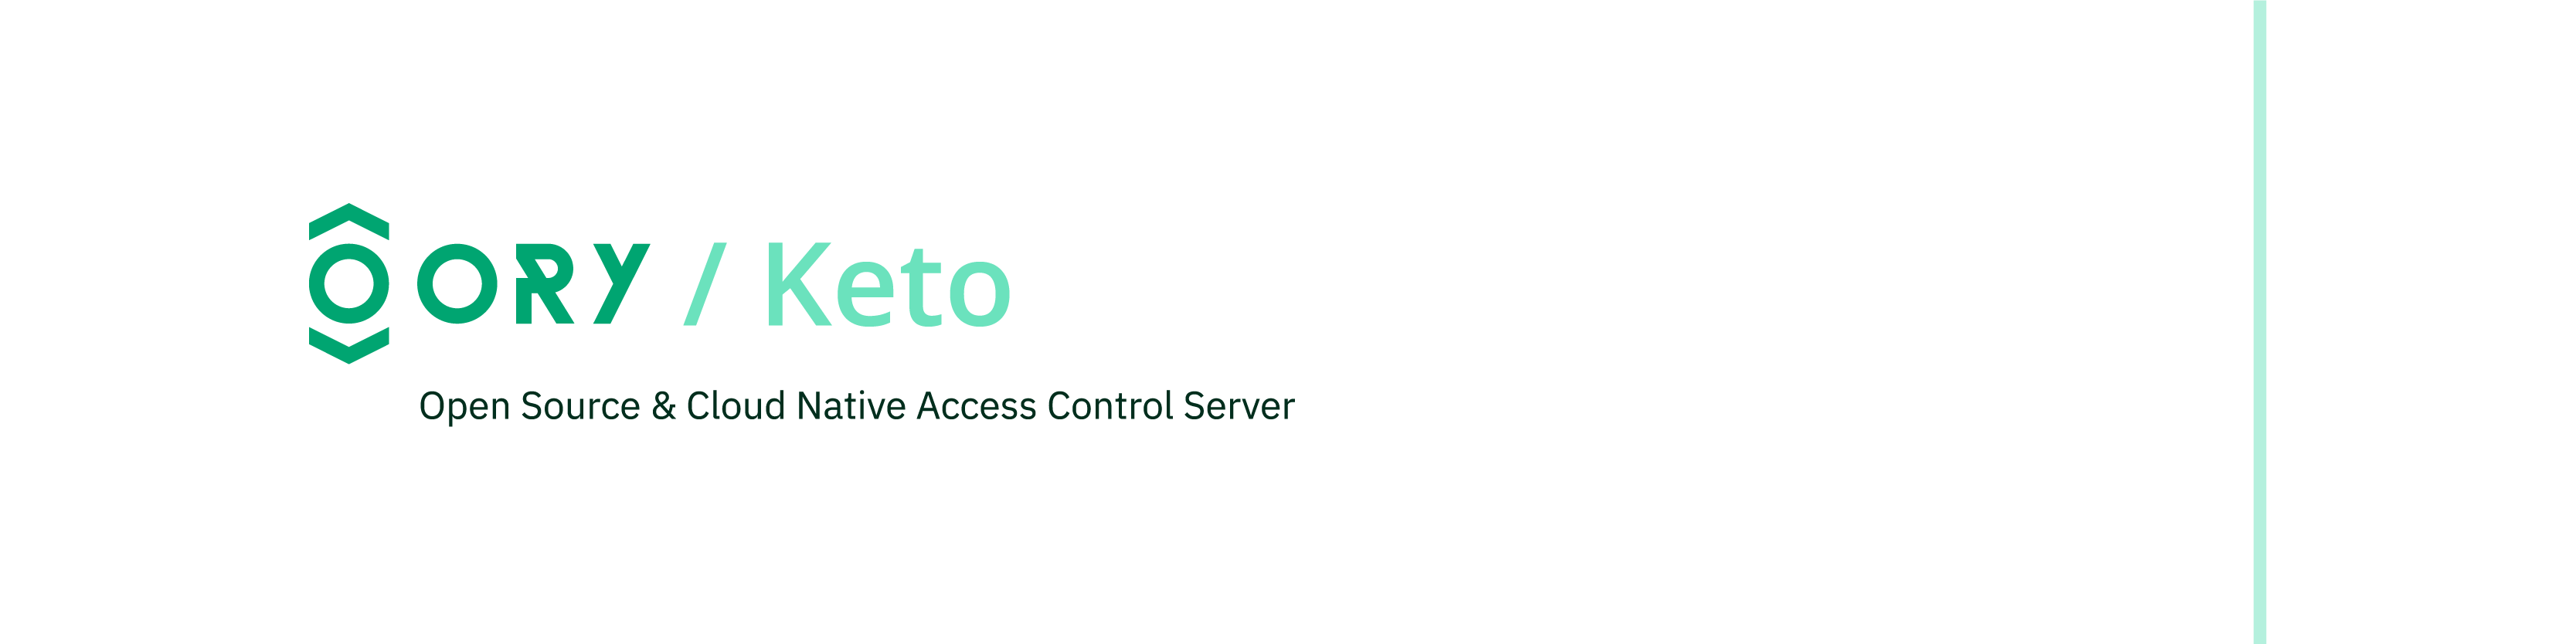 ORY Keto - Open Source & Cloud Native Access Control Server